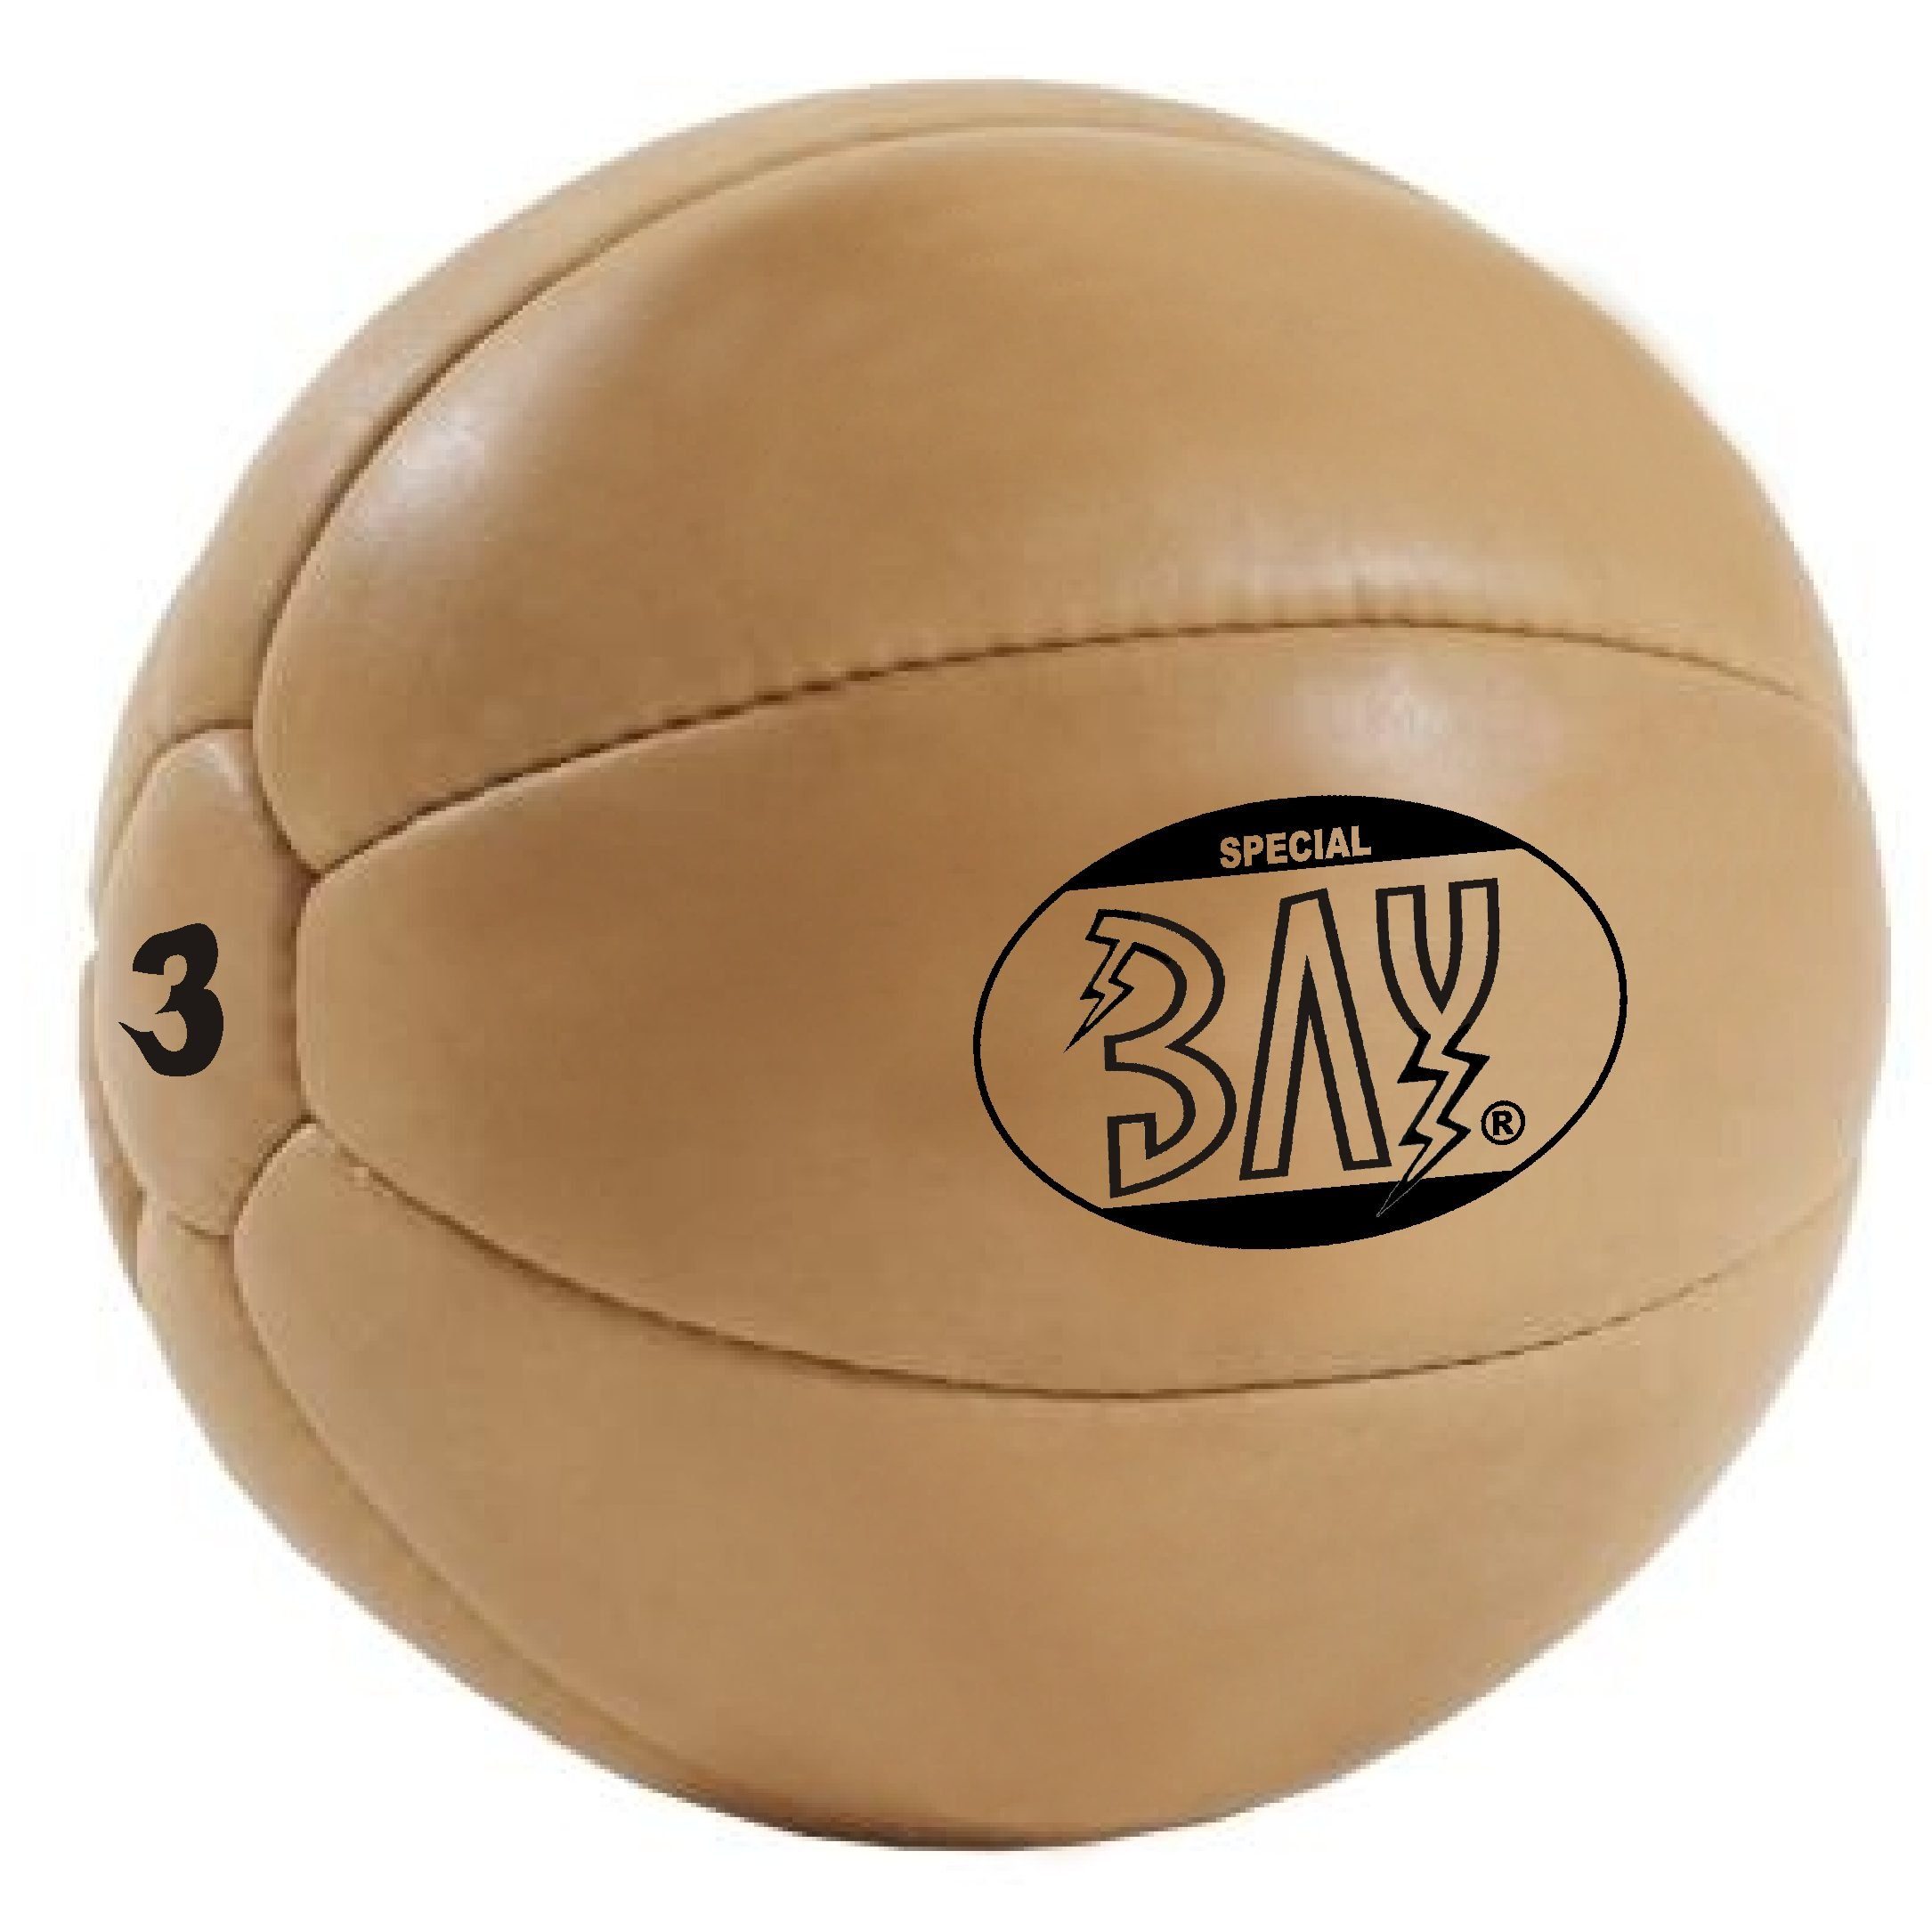 Ausführung Vollball Kraftball, Trainingsball natur Fitnessball Profi 3kg kg Medizinball braun 3 Kunstleder klassische Kraftsport BAY-Sports